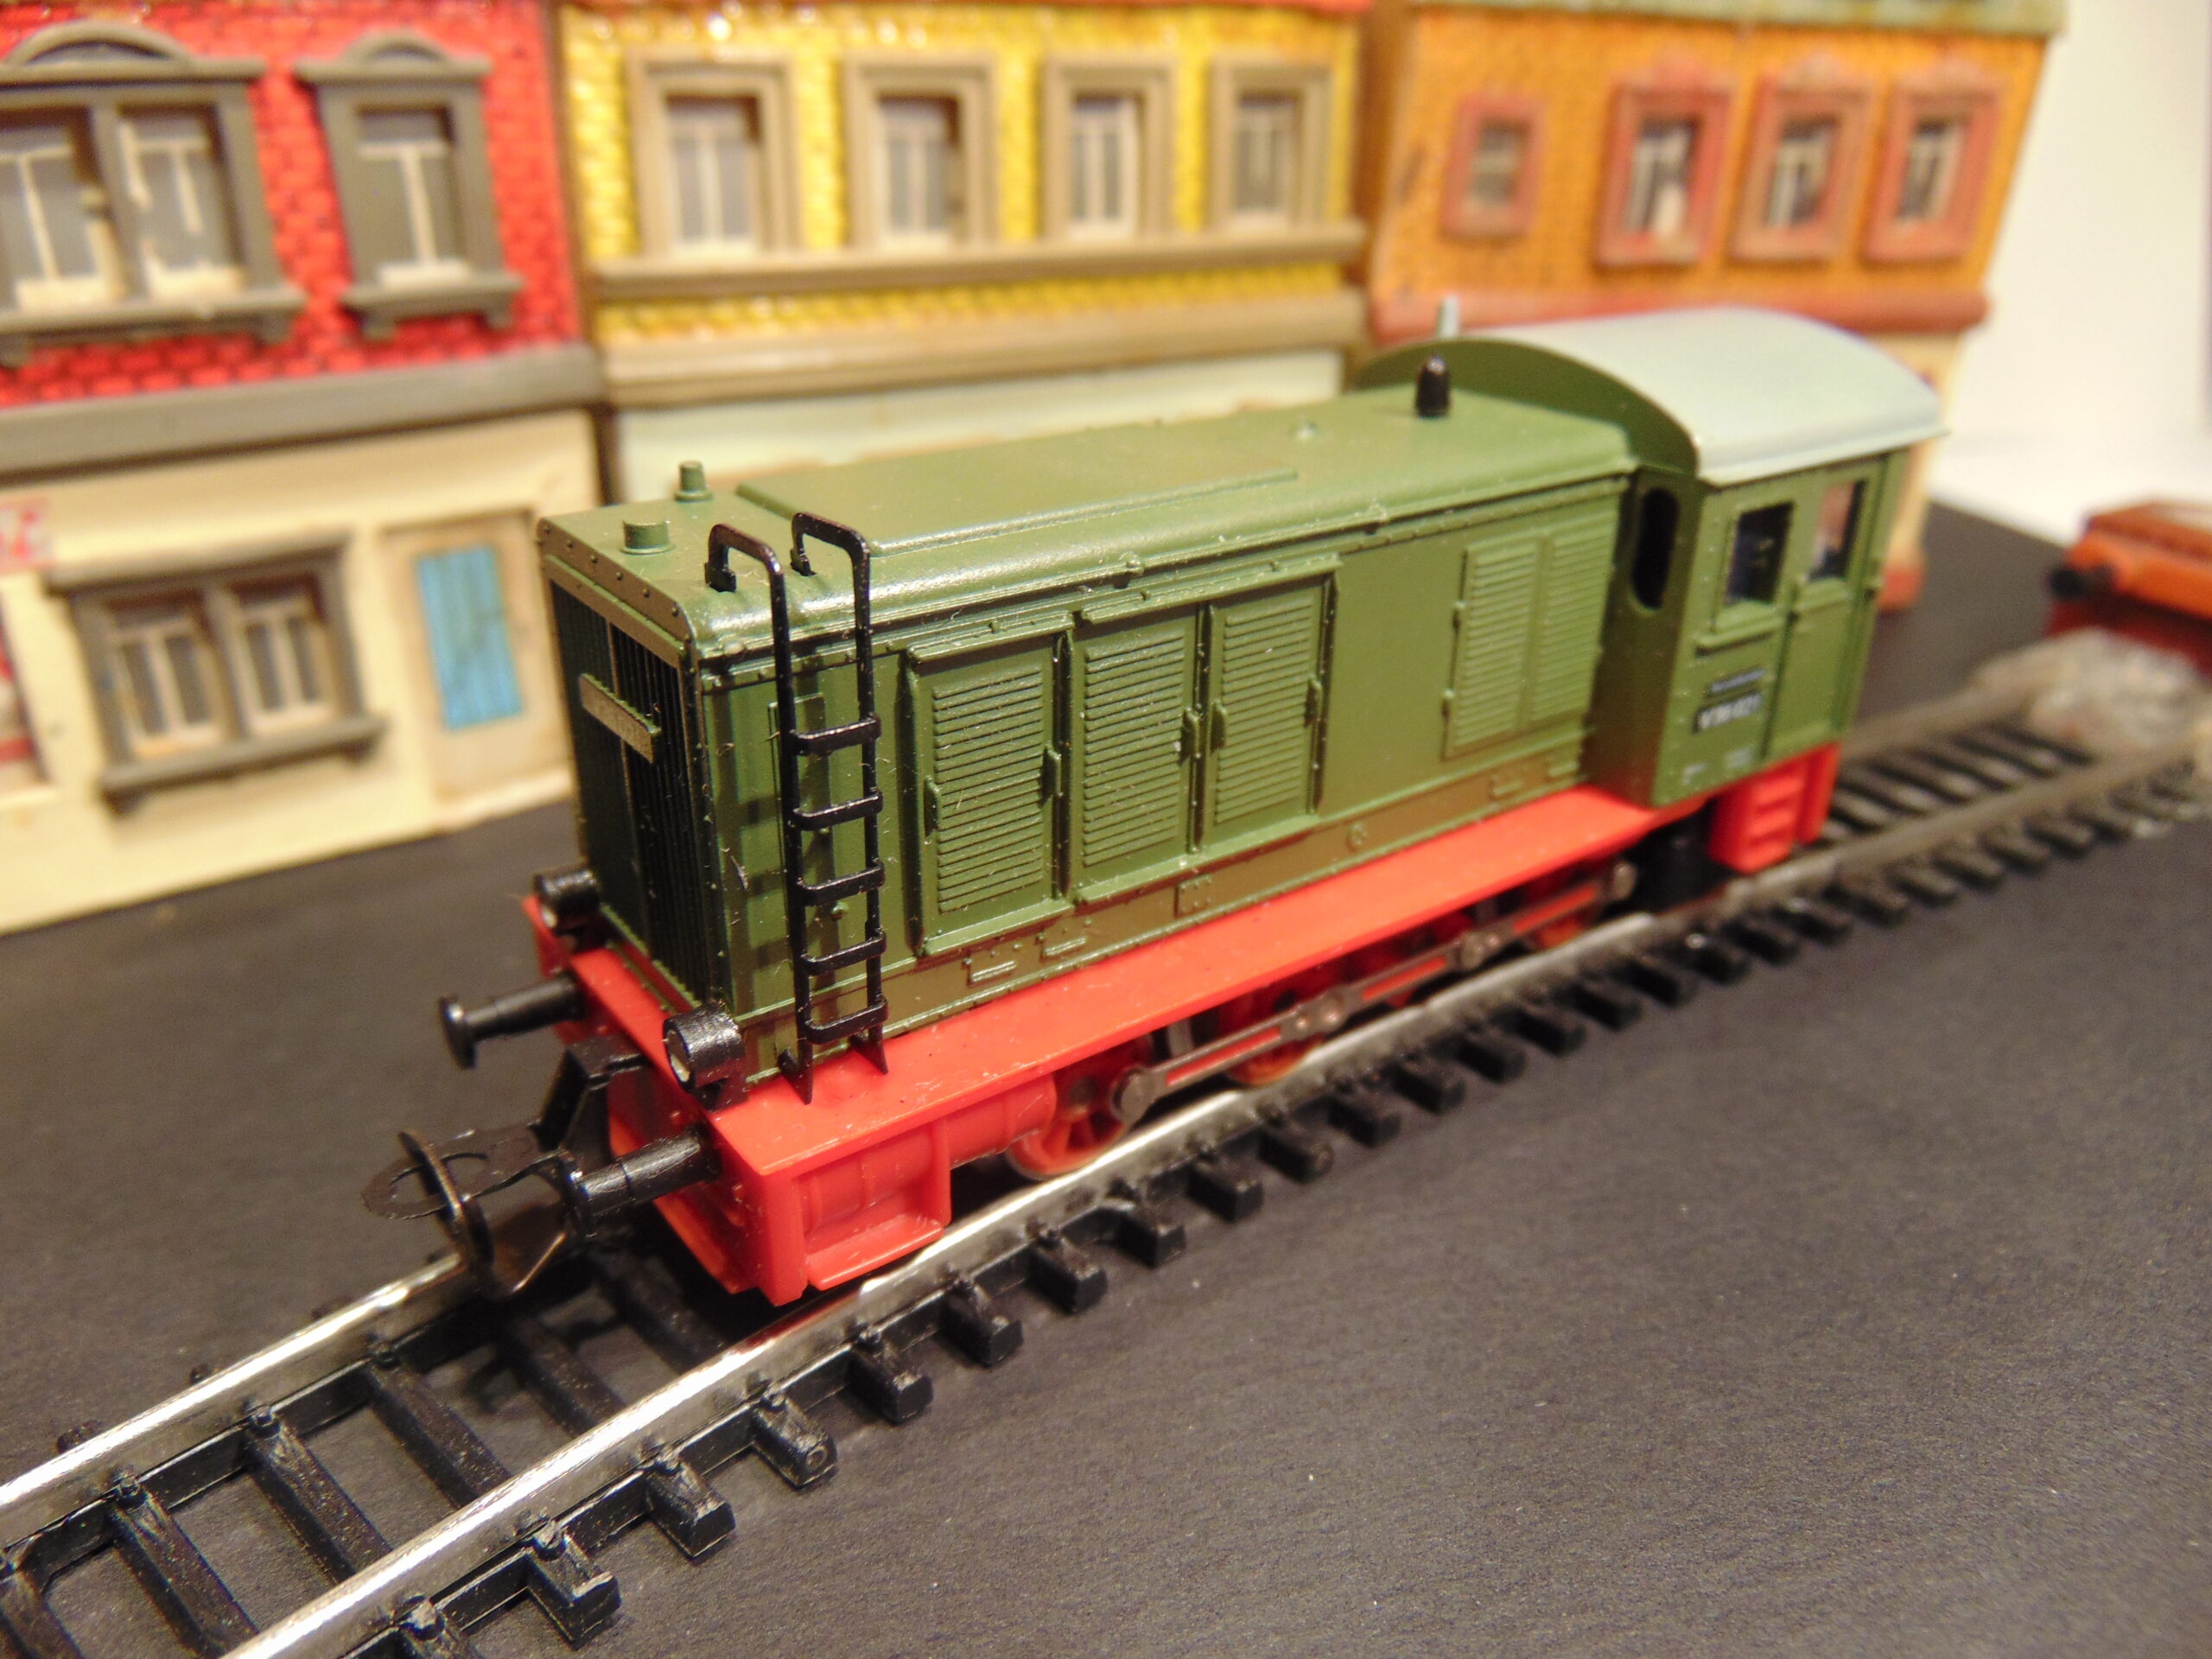 TT BTTB 02630 Diesellokomotive V 36 -021 DR/III grün